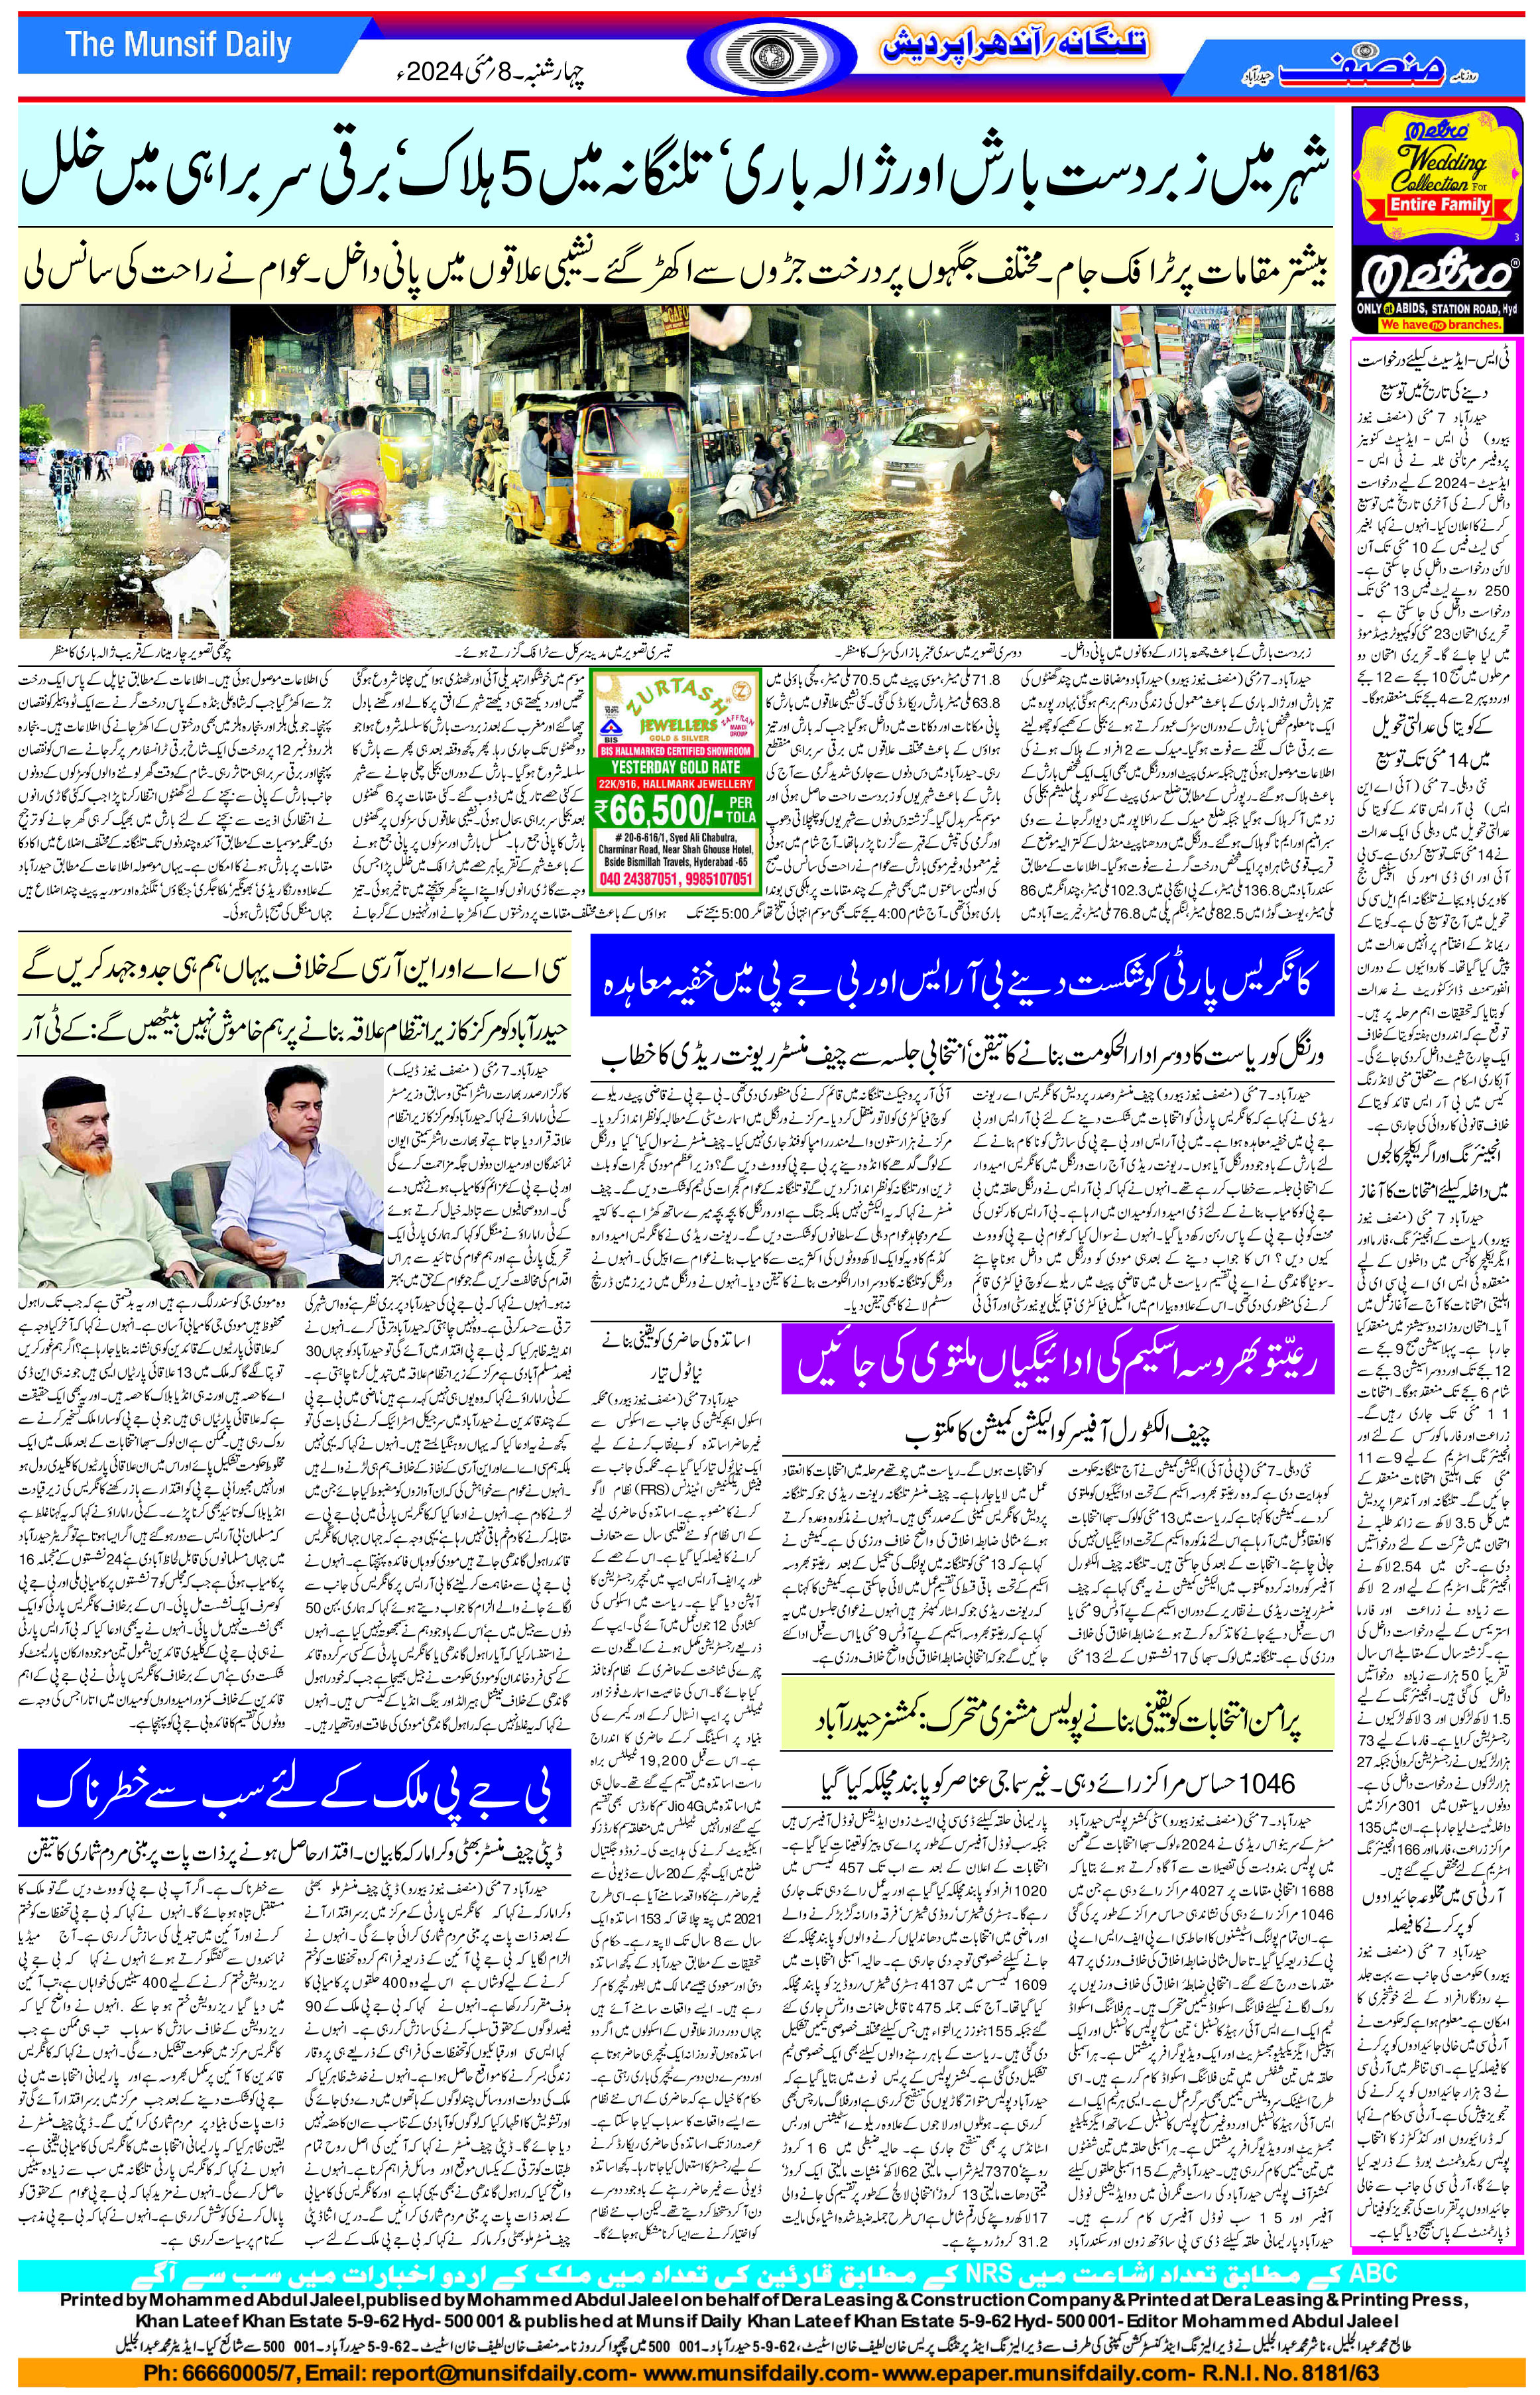 Munsif urdu Daily, Hyderabad